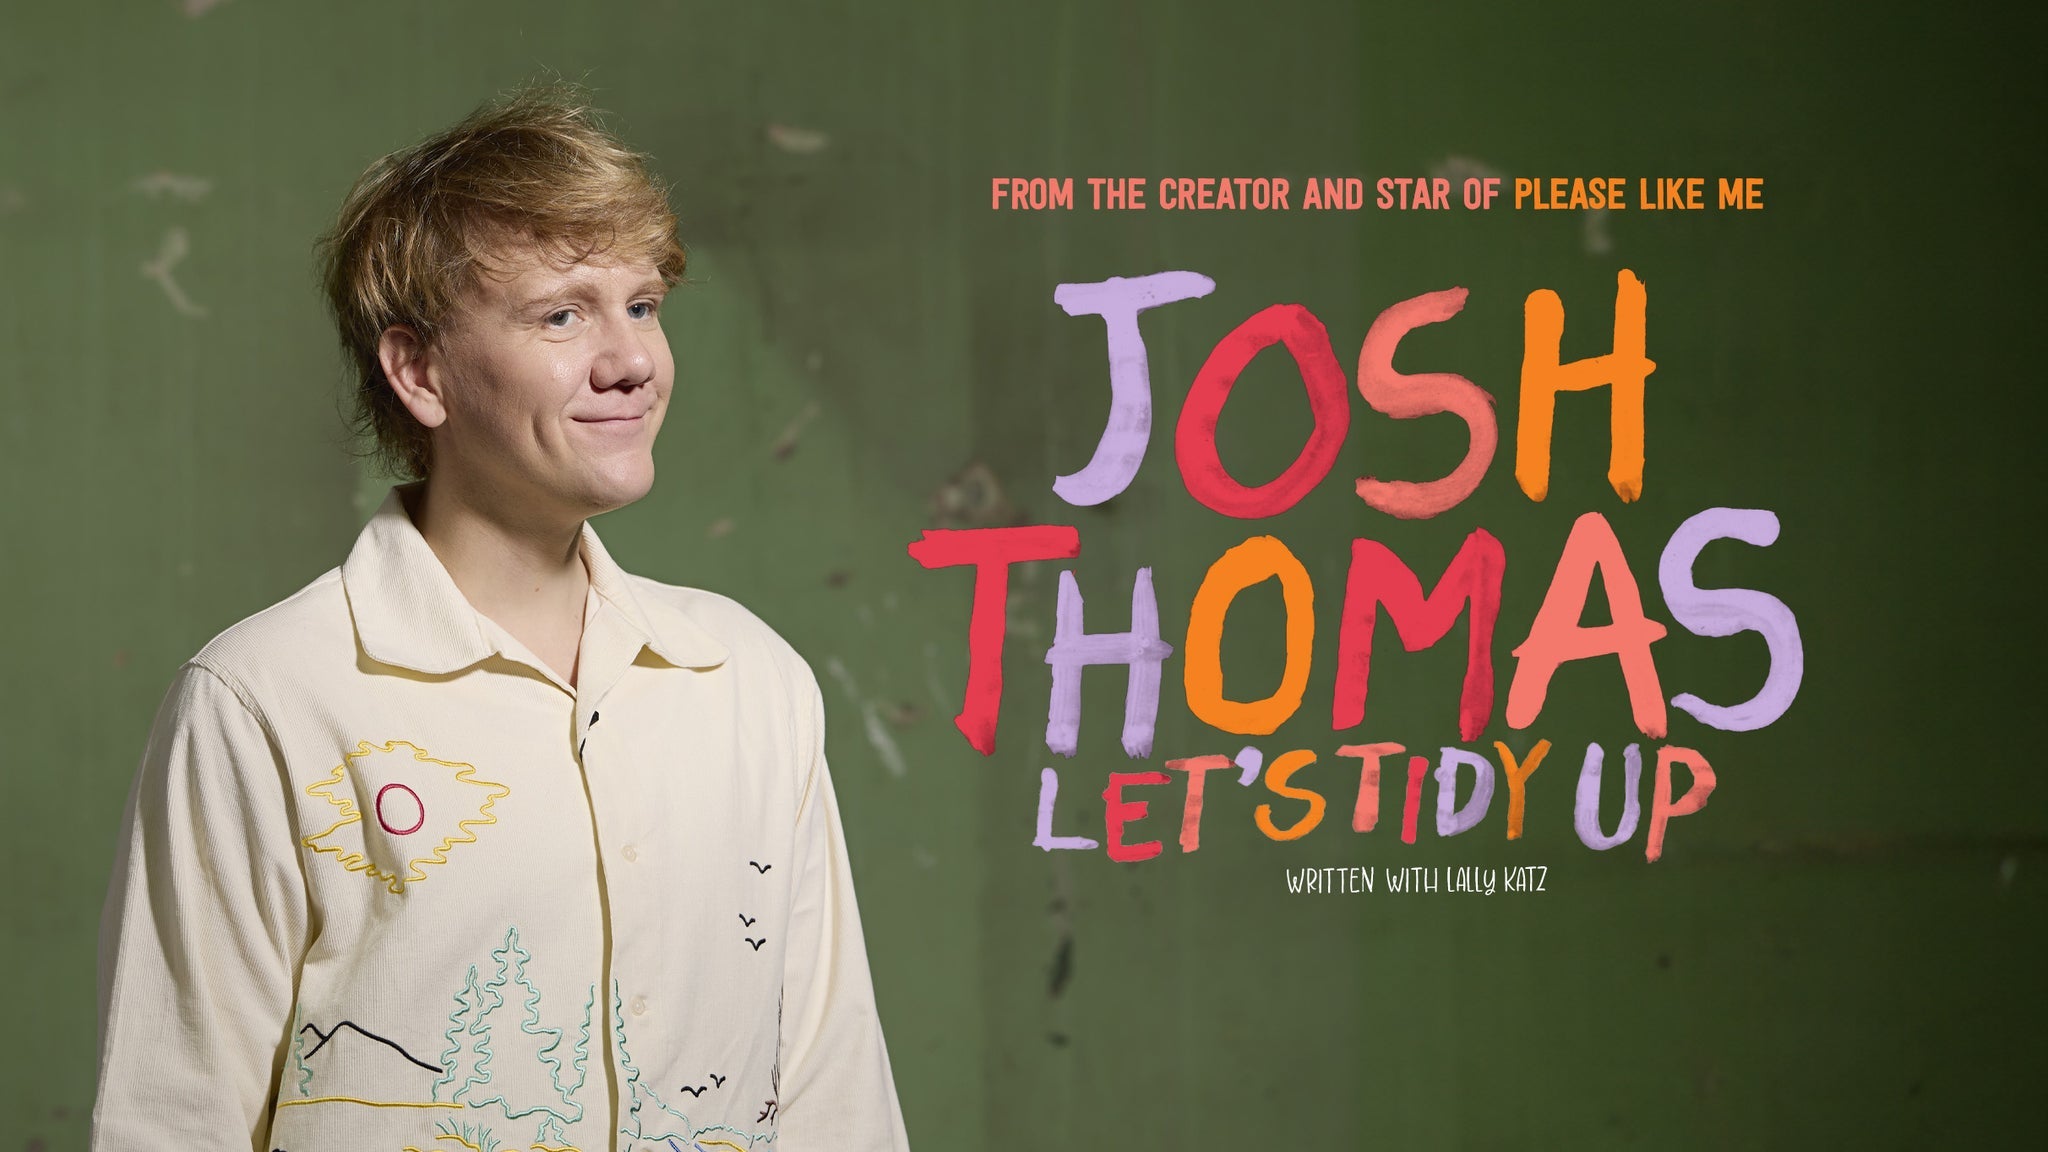 Josh Thomas - Let's Tidy Up